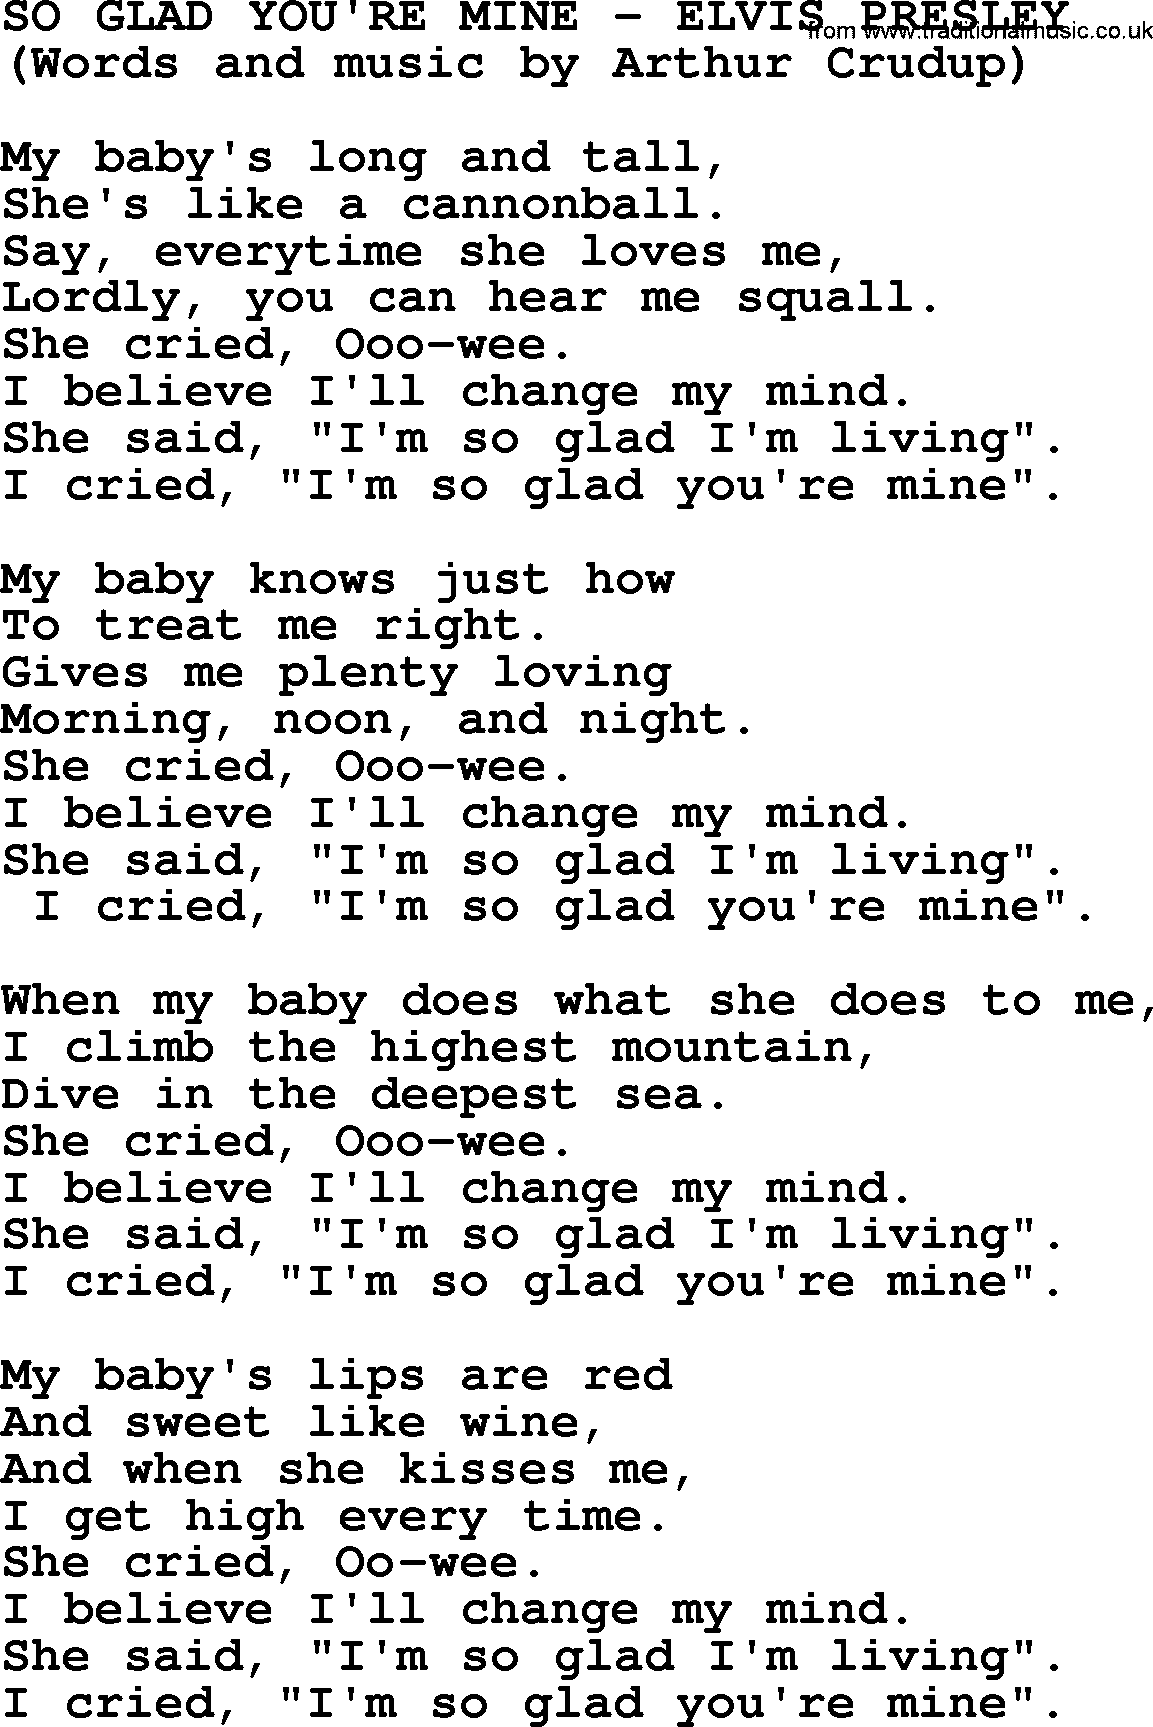 Elvis Presley song: So Glad You're Mine lyrics